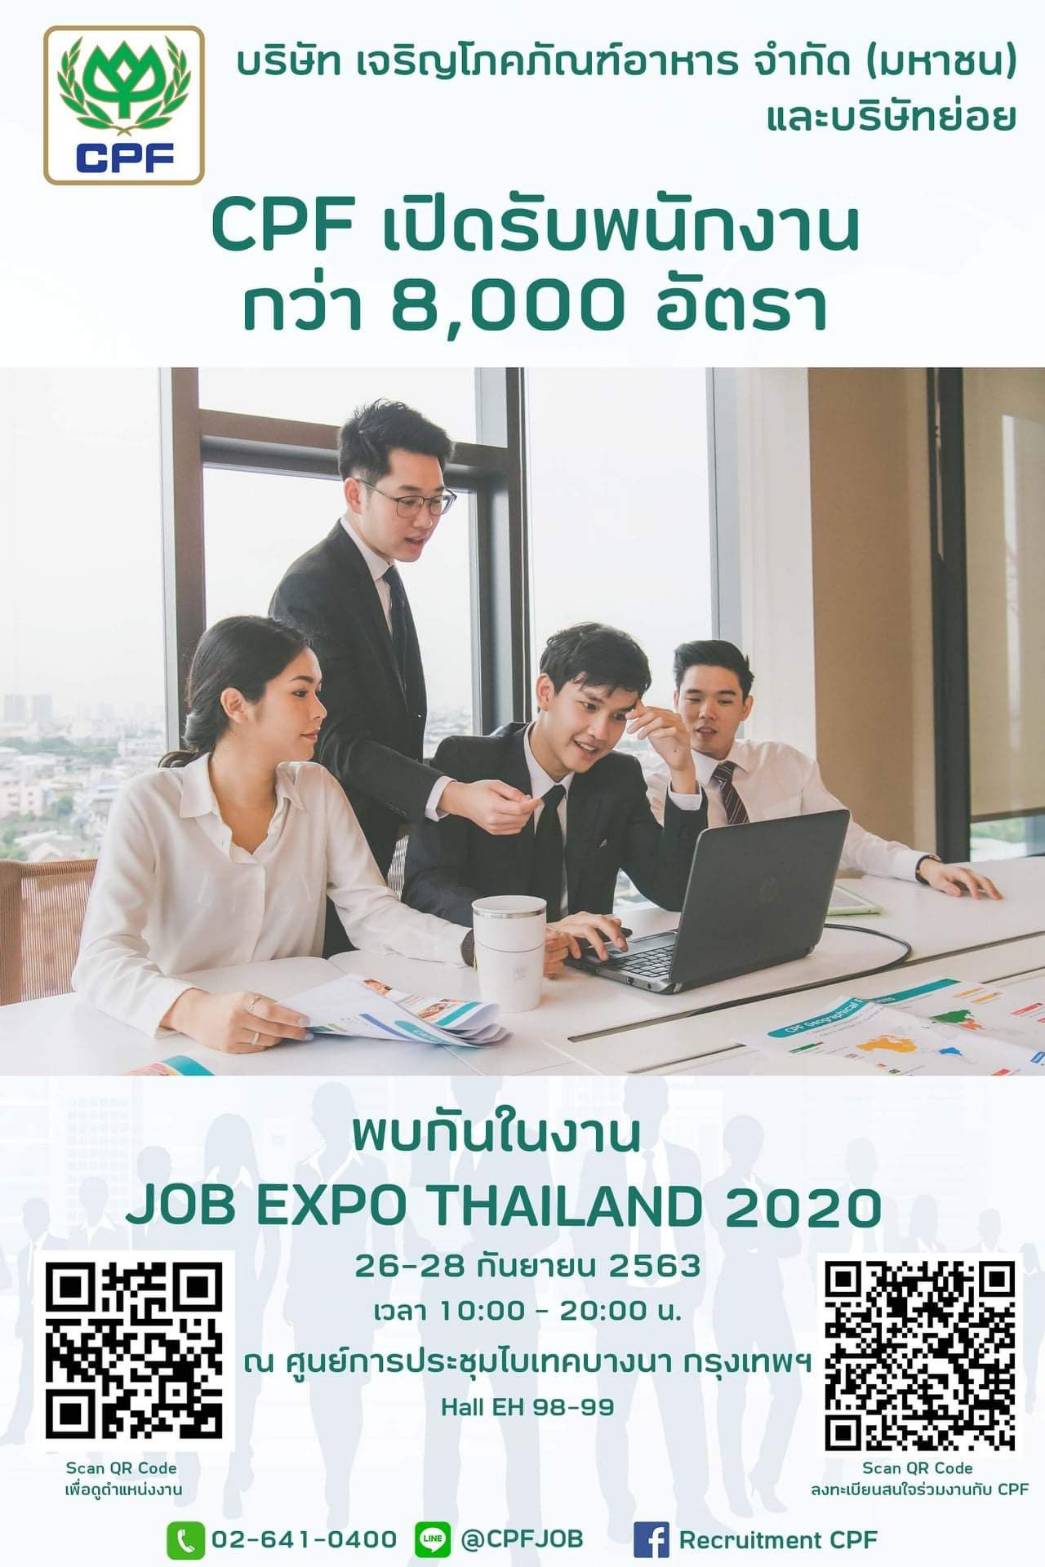 CPF เปิดบูธรับพนักงานกว่า 8,000 อัตราในงาน JOB EXPO THAILAND 2020